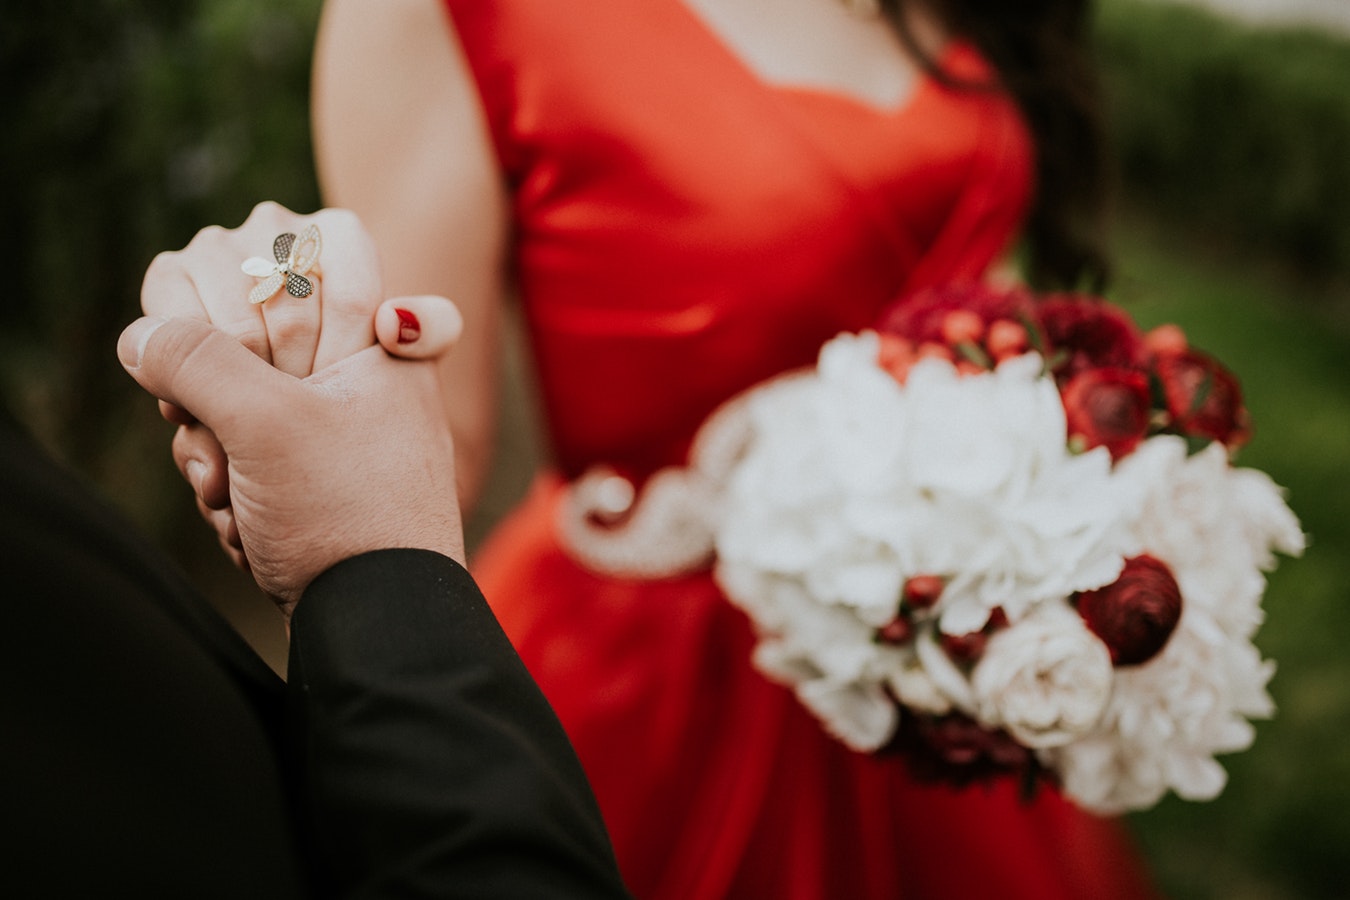 Tokopedia acquires Indonesian wedding marketplace Bridestory